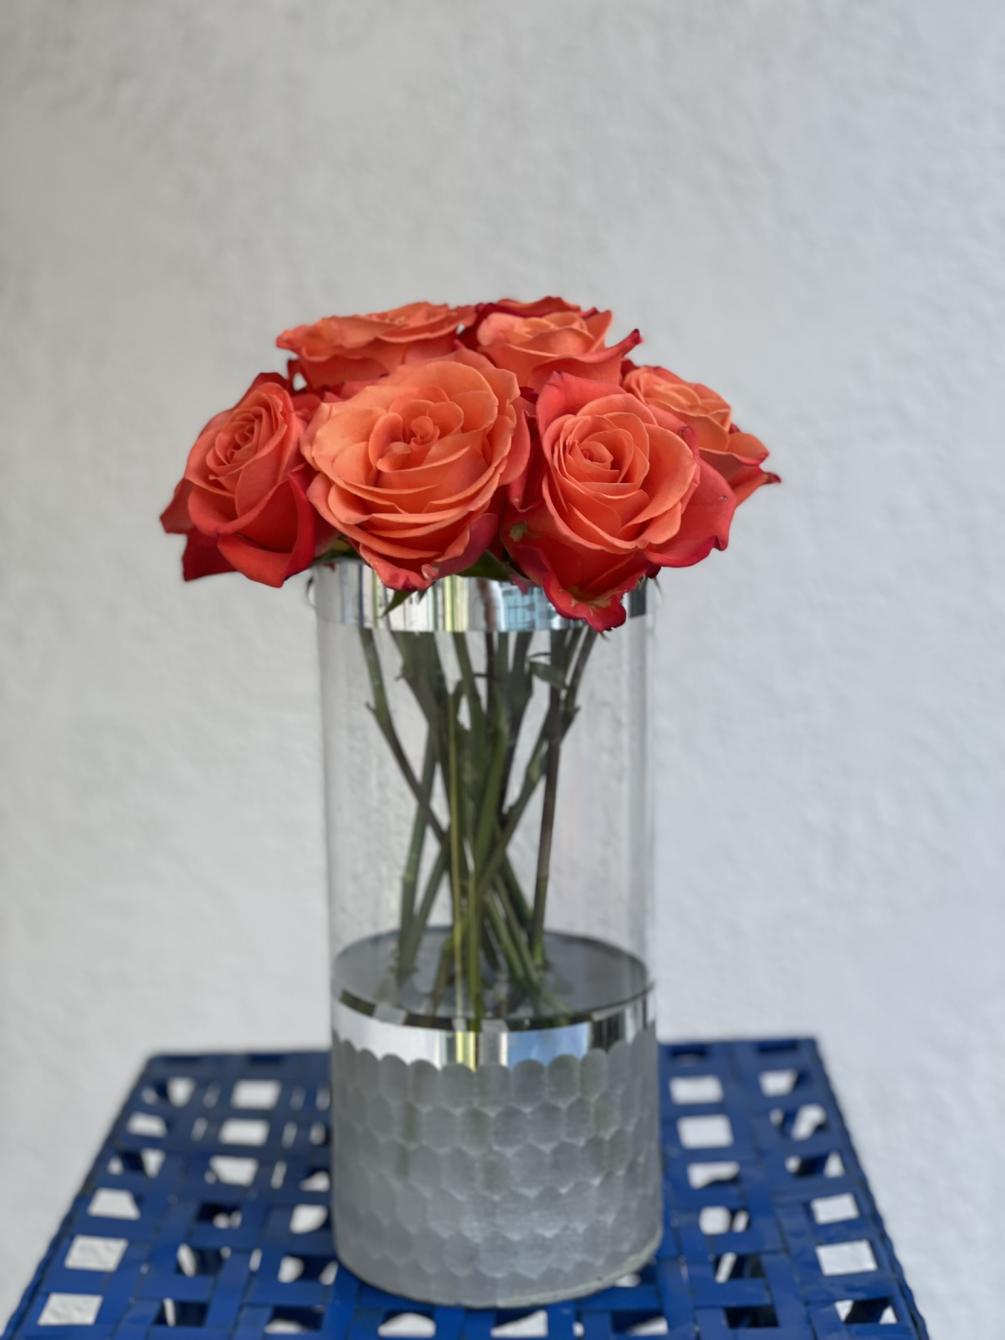 13 long stem Orange roses with an smooth, elegant tangerine center arranged